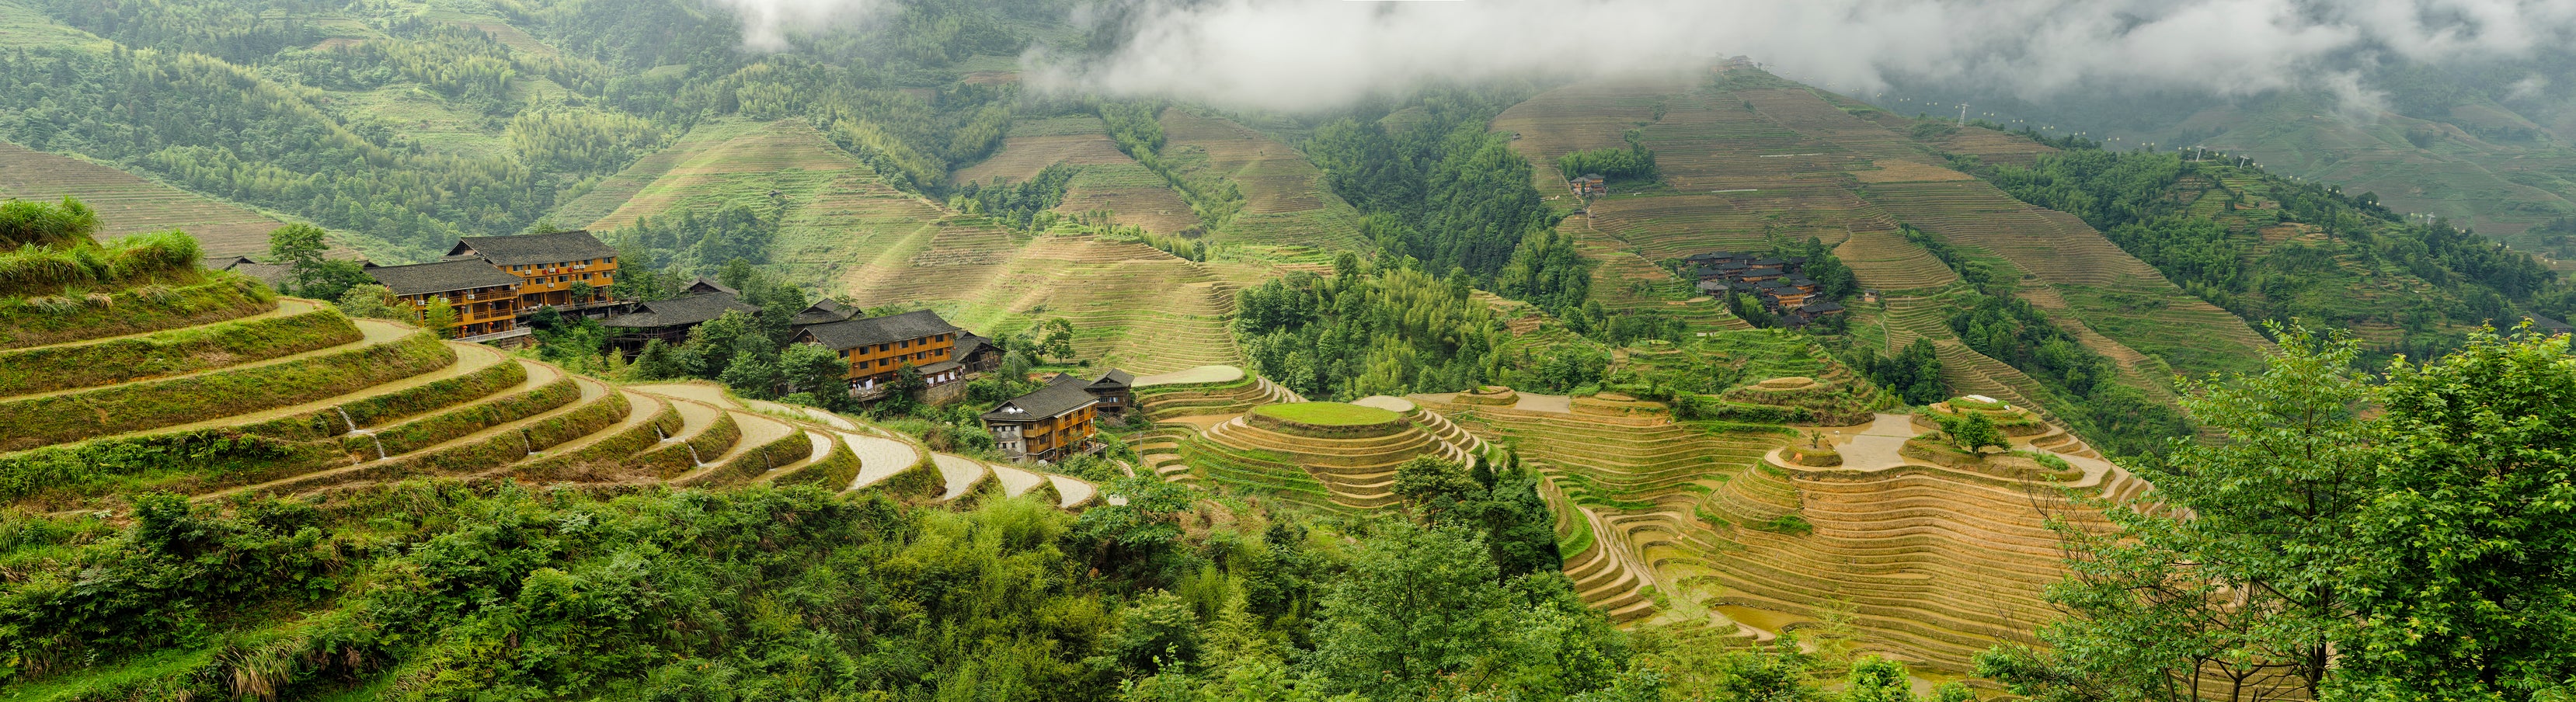 Tiantouzhai rice terraces